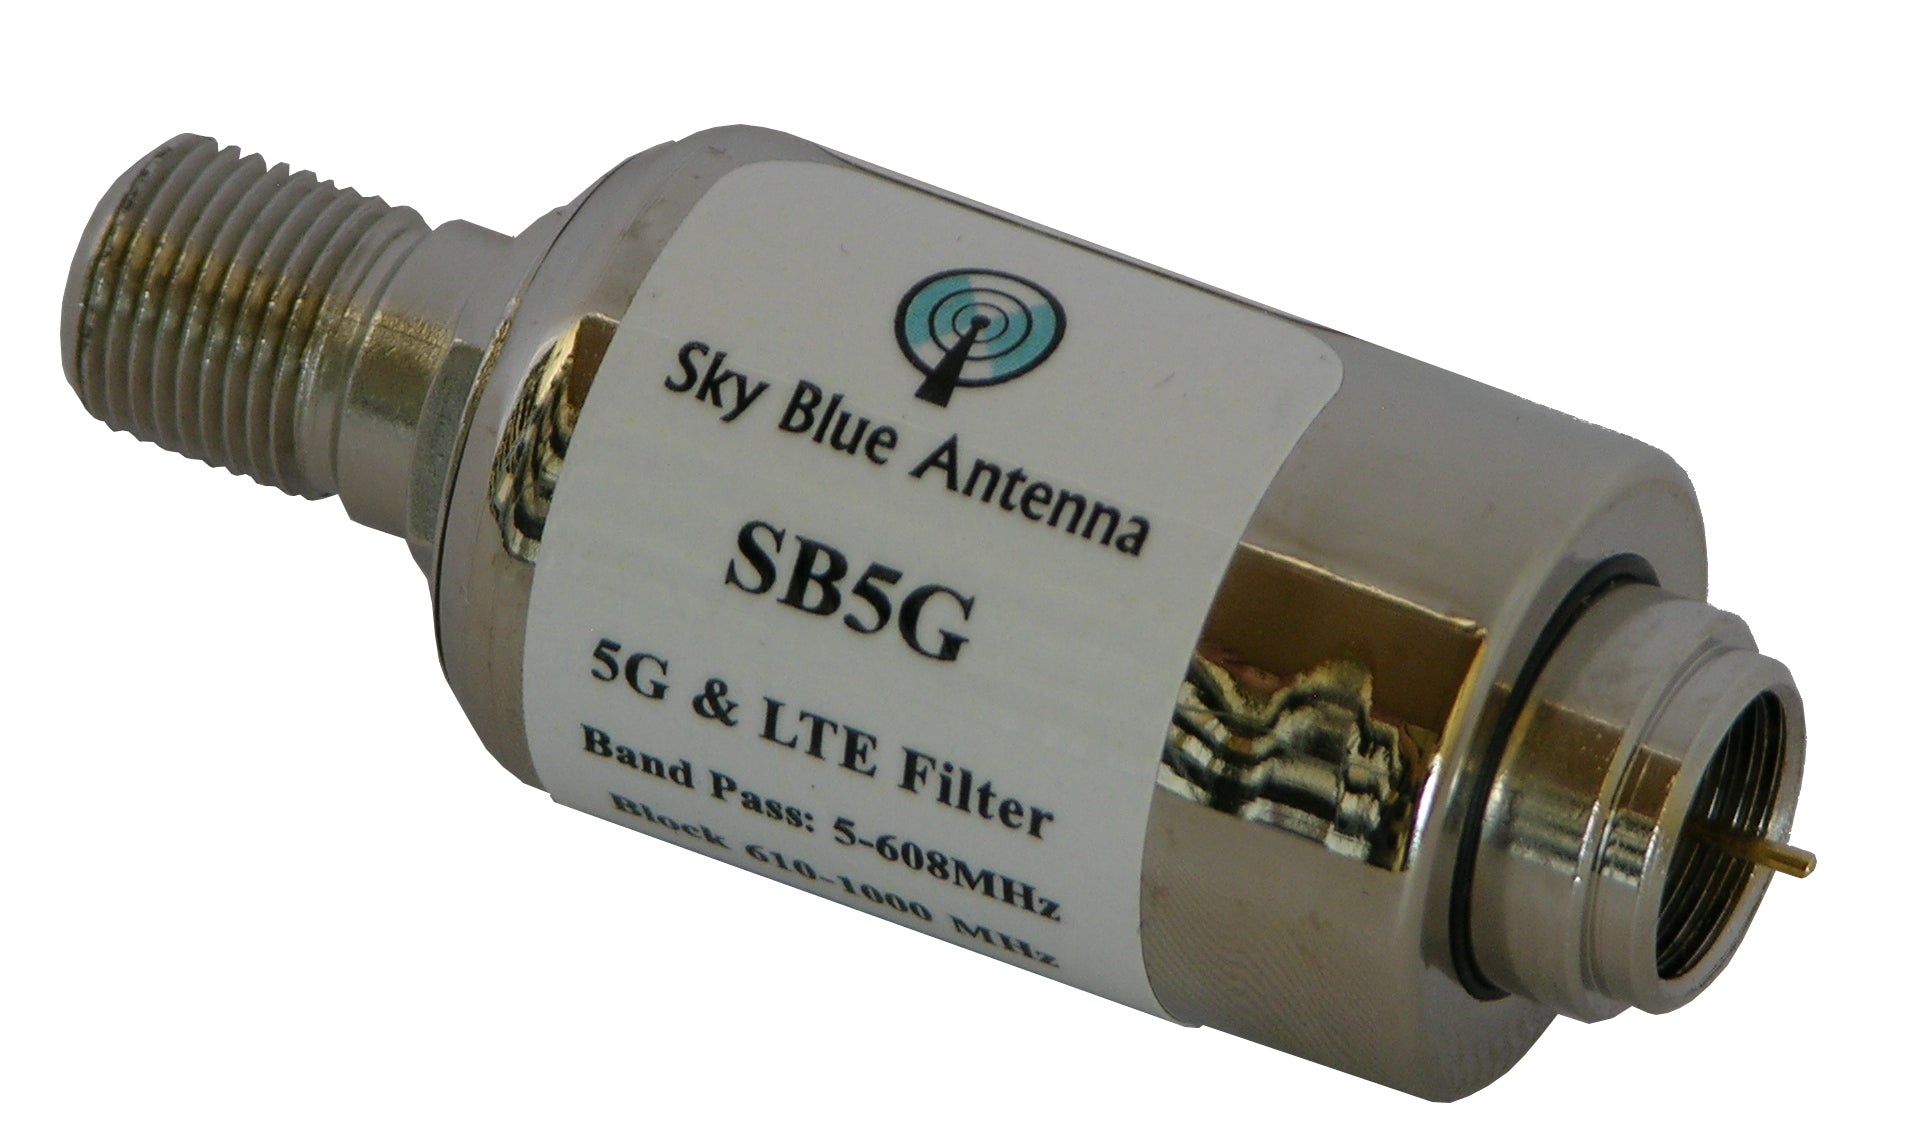 Sky Blue Antenna, Sky Blue Antenna 5G / LTE Cell Phone filter for TV antennas, SB5G, FREE SHIPPING!